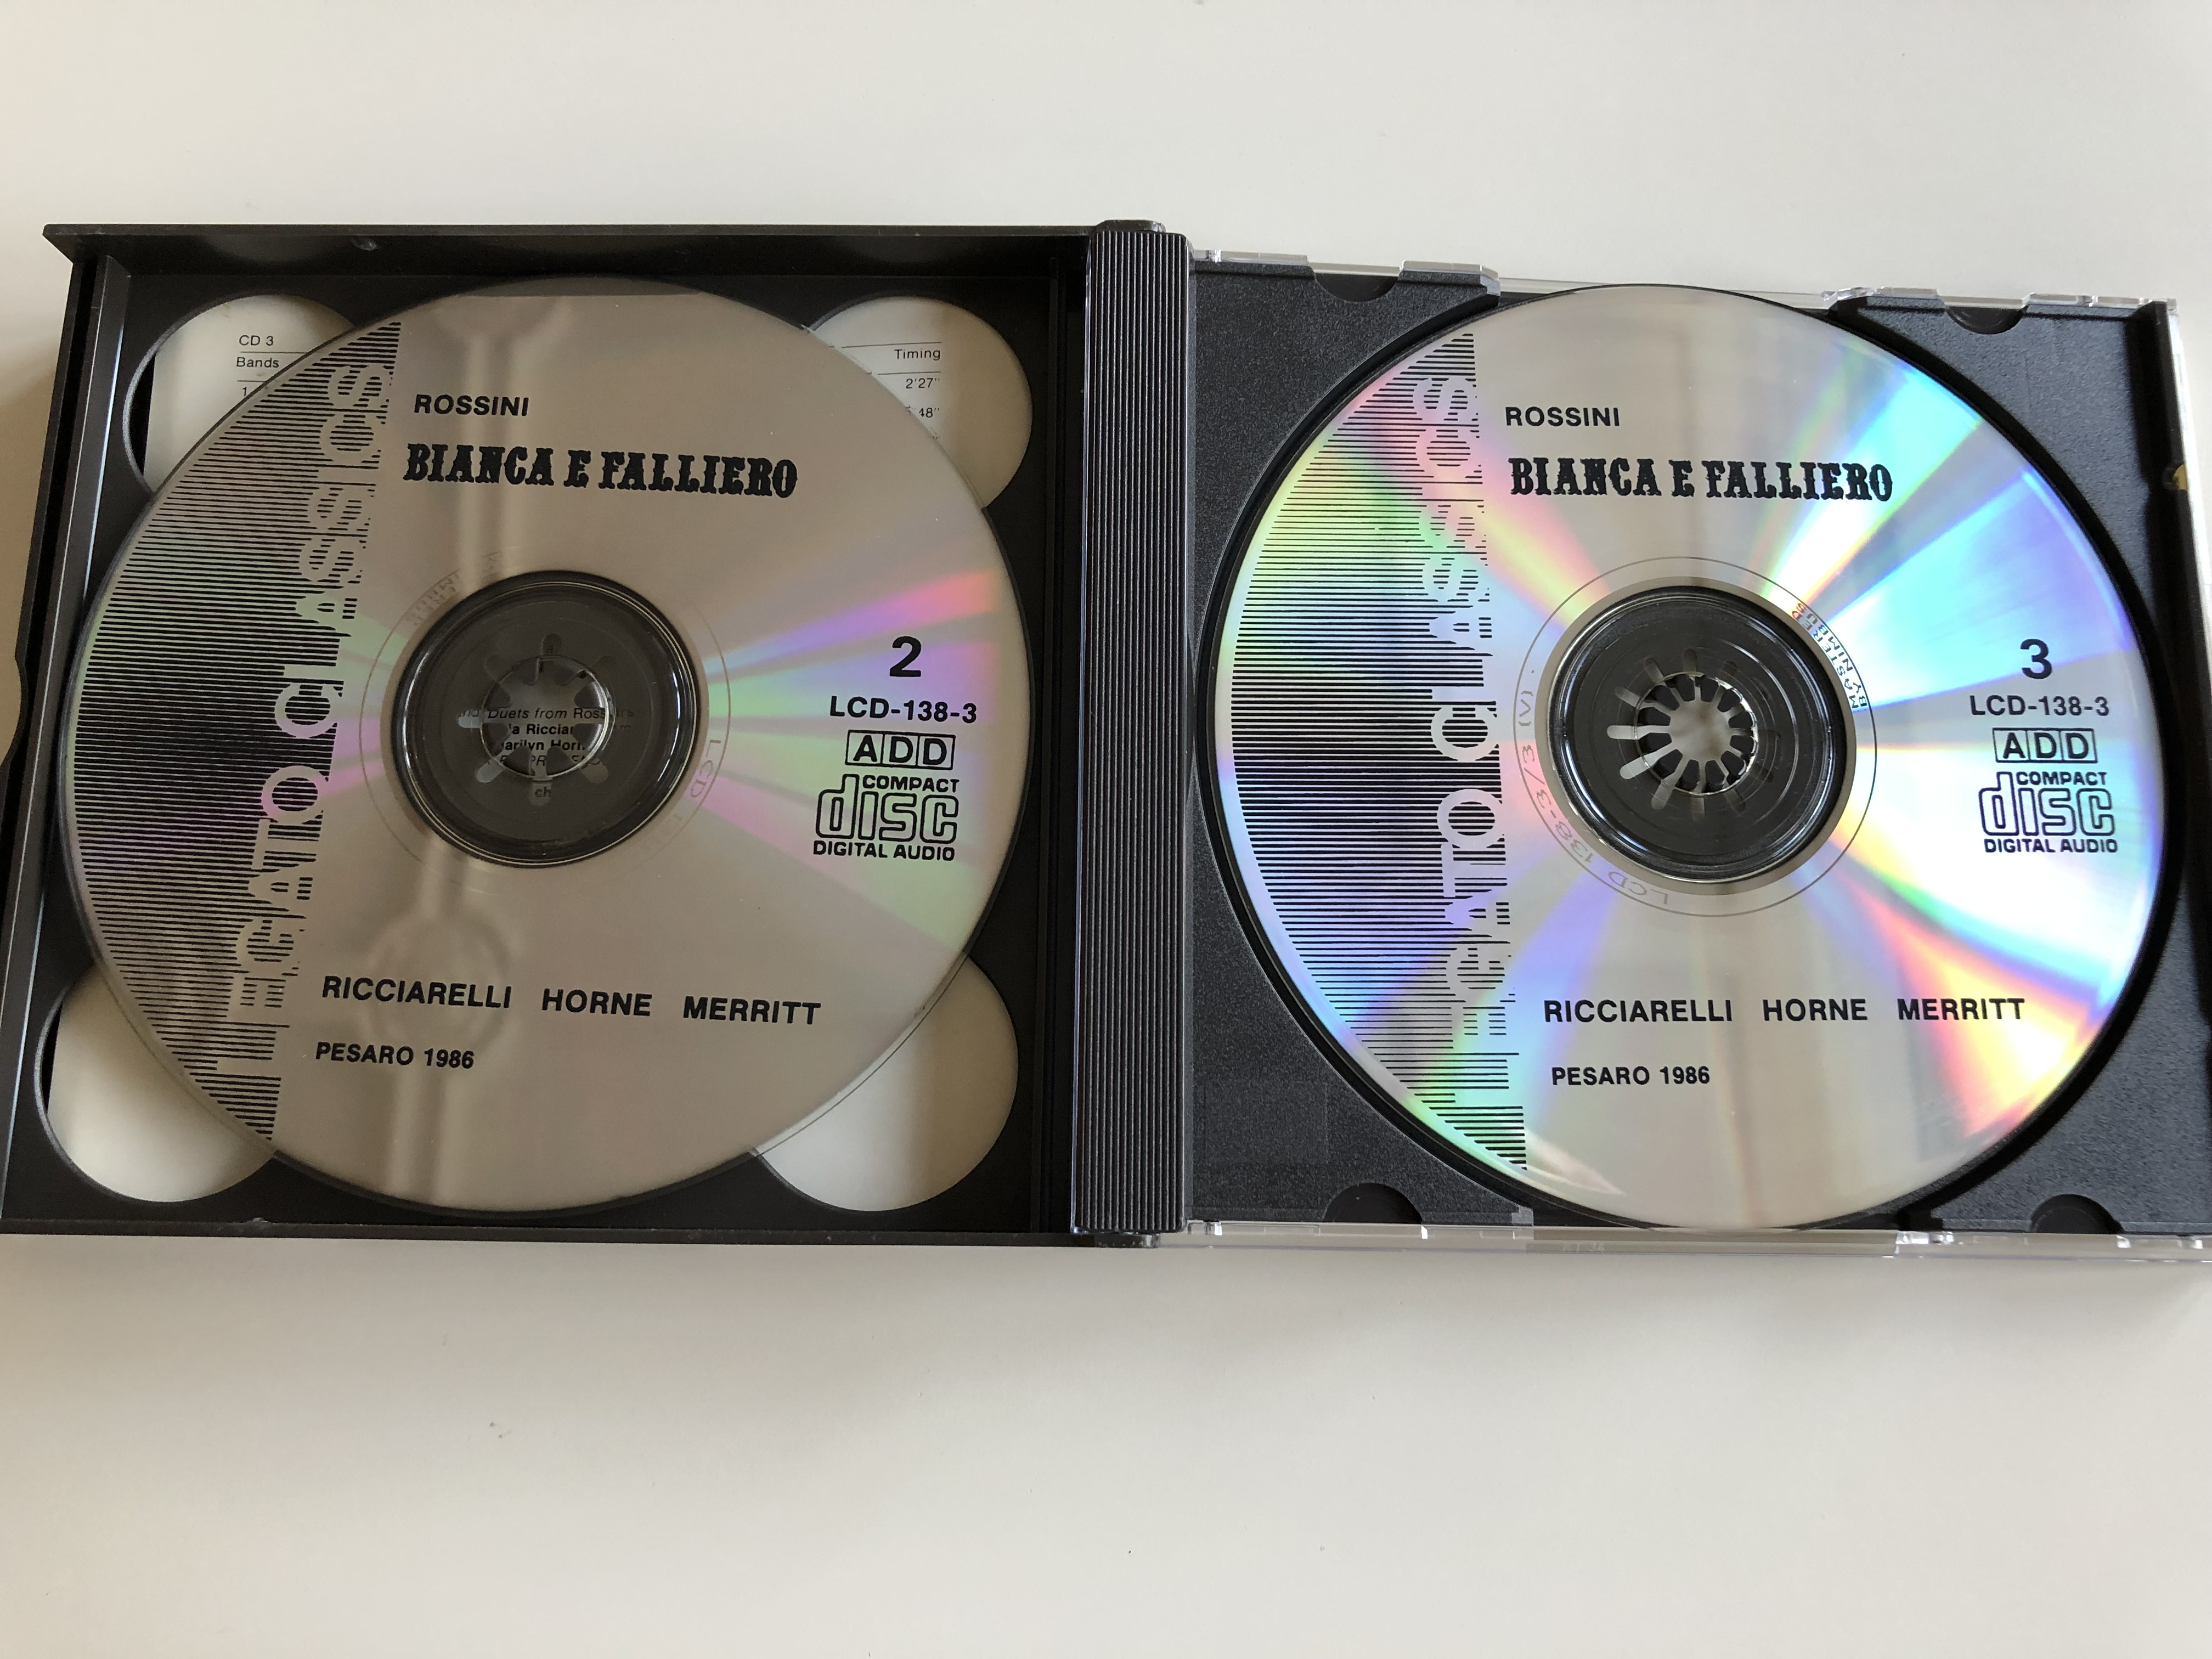 rossini-bianca-e-falliero-ricciarelli-horne-merritt-pesaro-1986-legato-classics-audio-cd-box-3-discs-lcd-138-3-8-.jpg